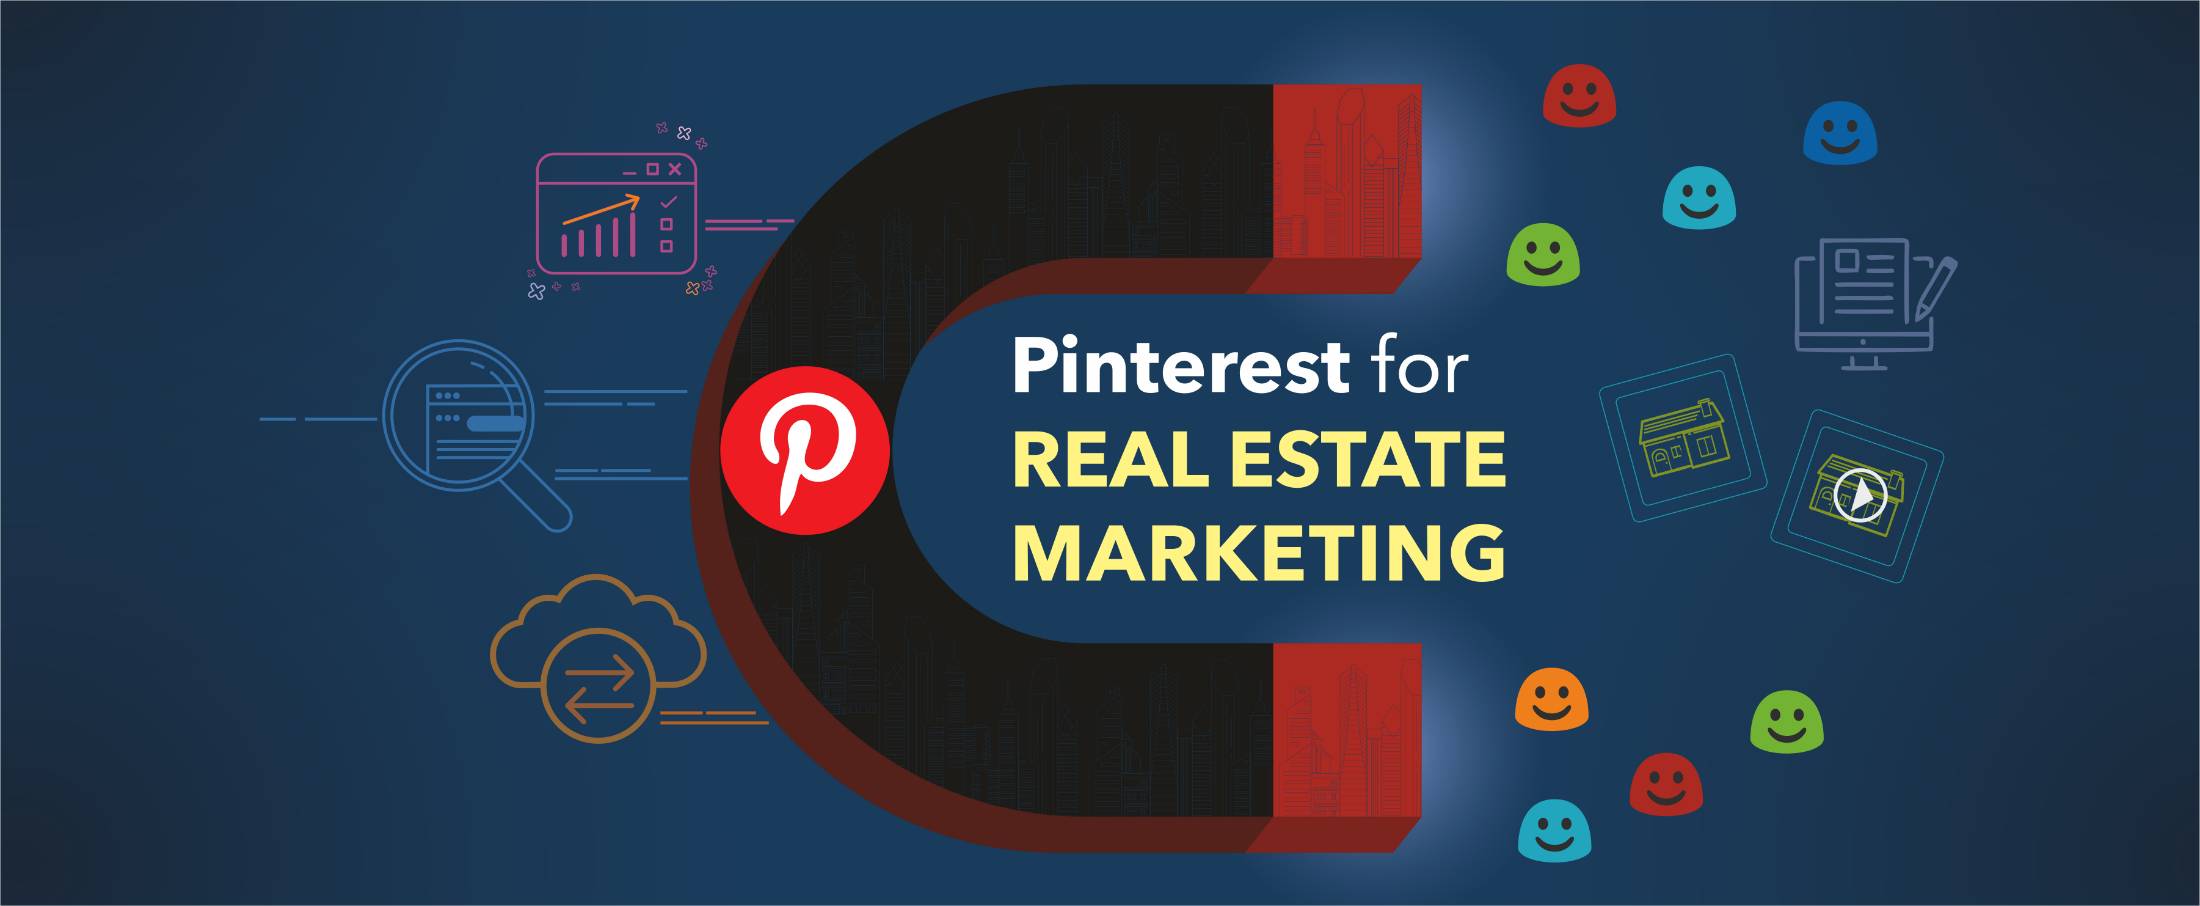 Pinterest for Real Estate Marketing